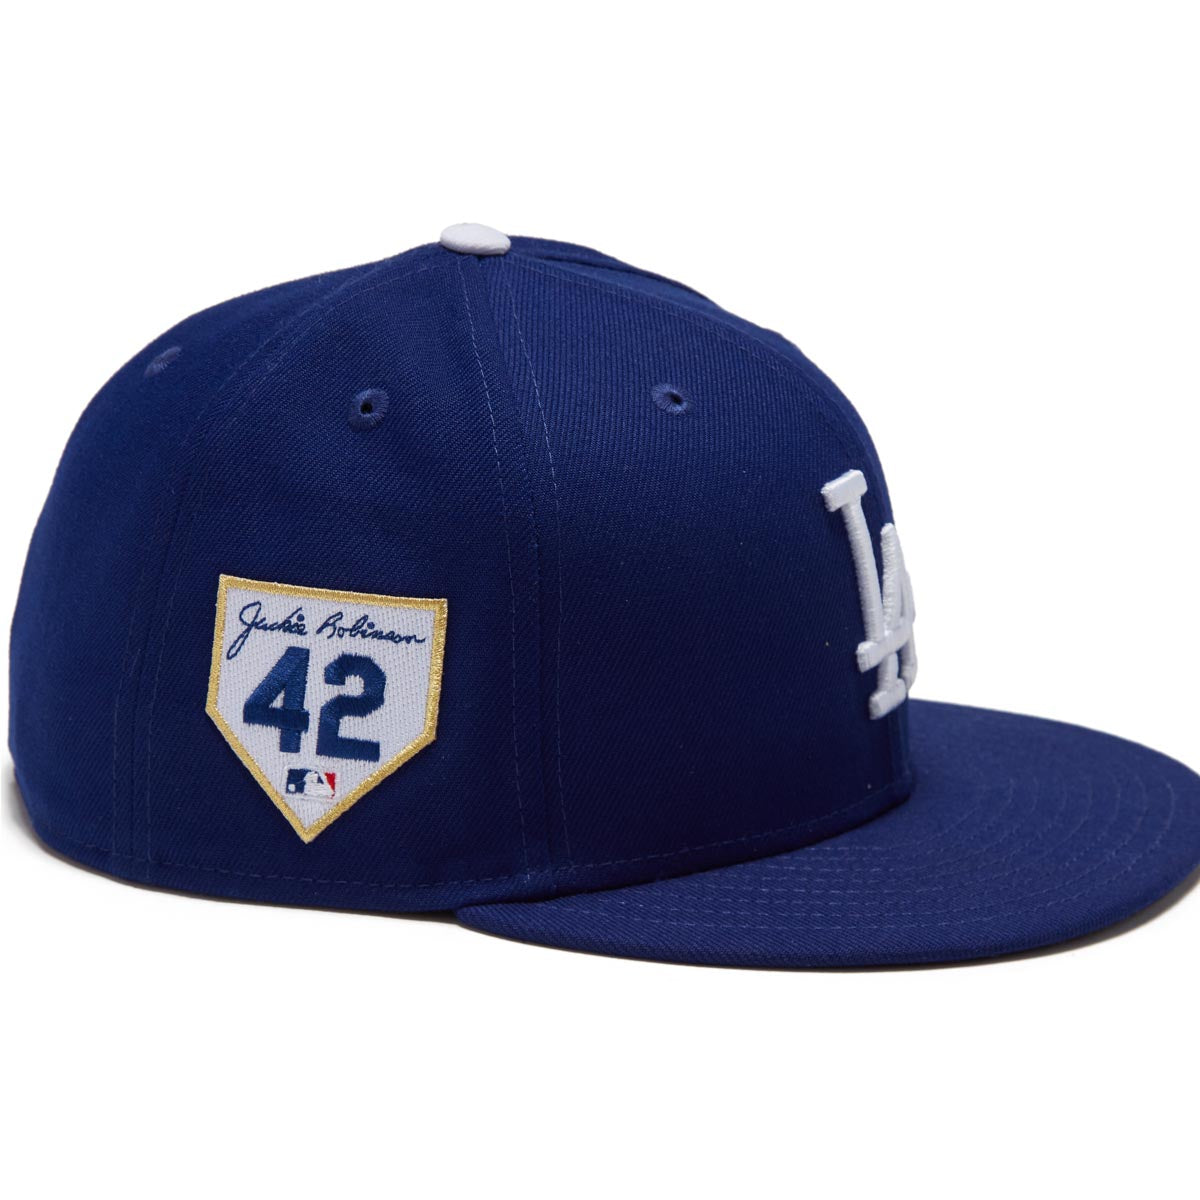 New Era x Jackie Robinson Dodgers Hat - Blue/White image 2